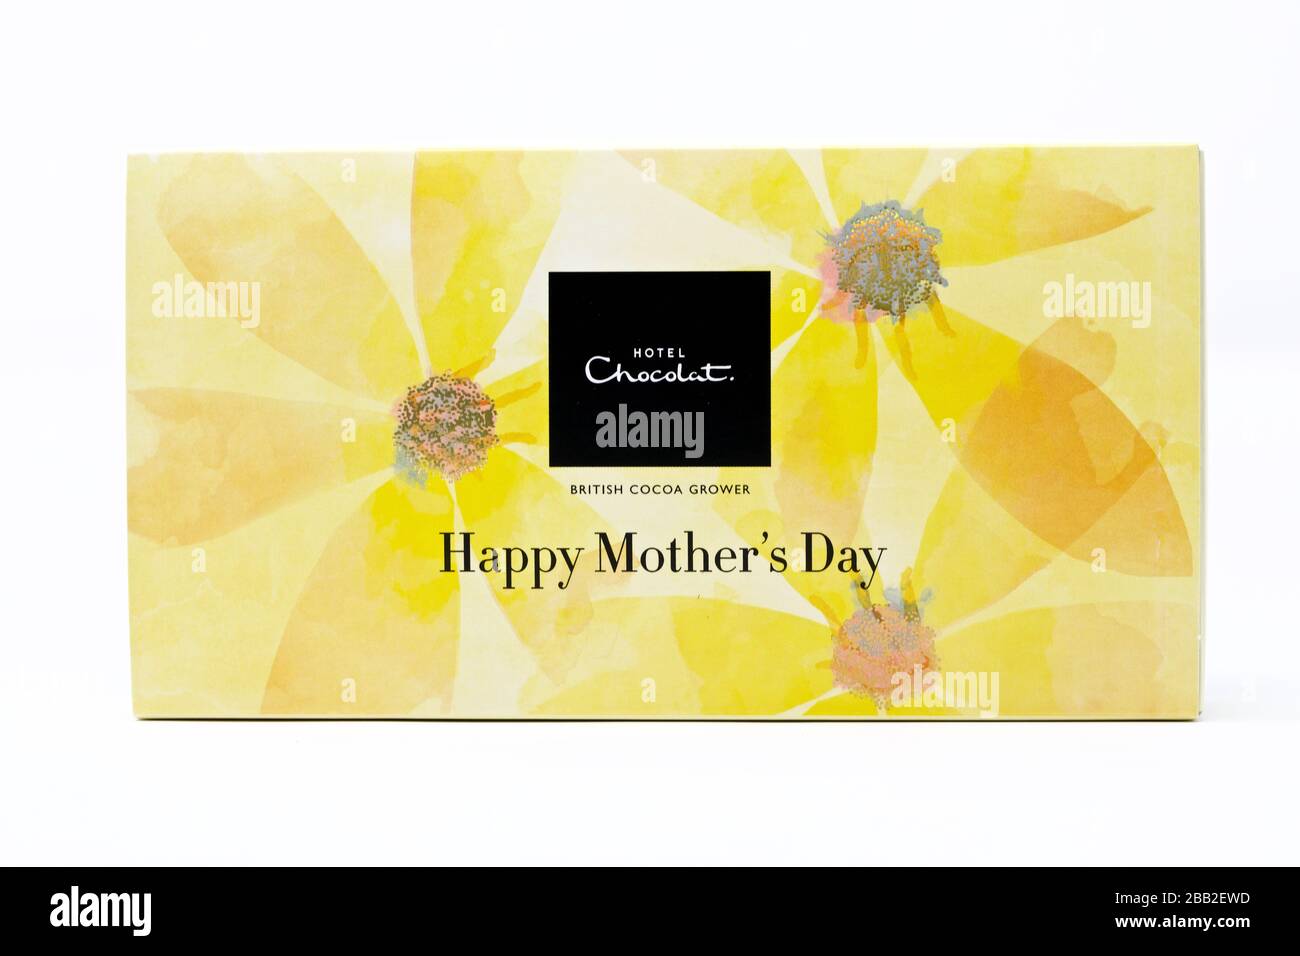 Happy Mother’s Day Hotel Chocolat luxury handmade chocolates on a white background Stock Photo